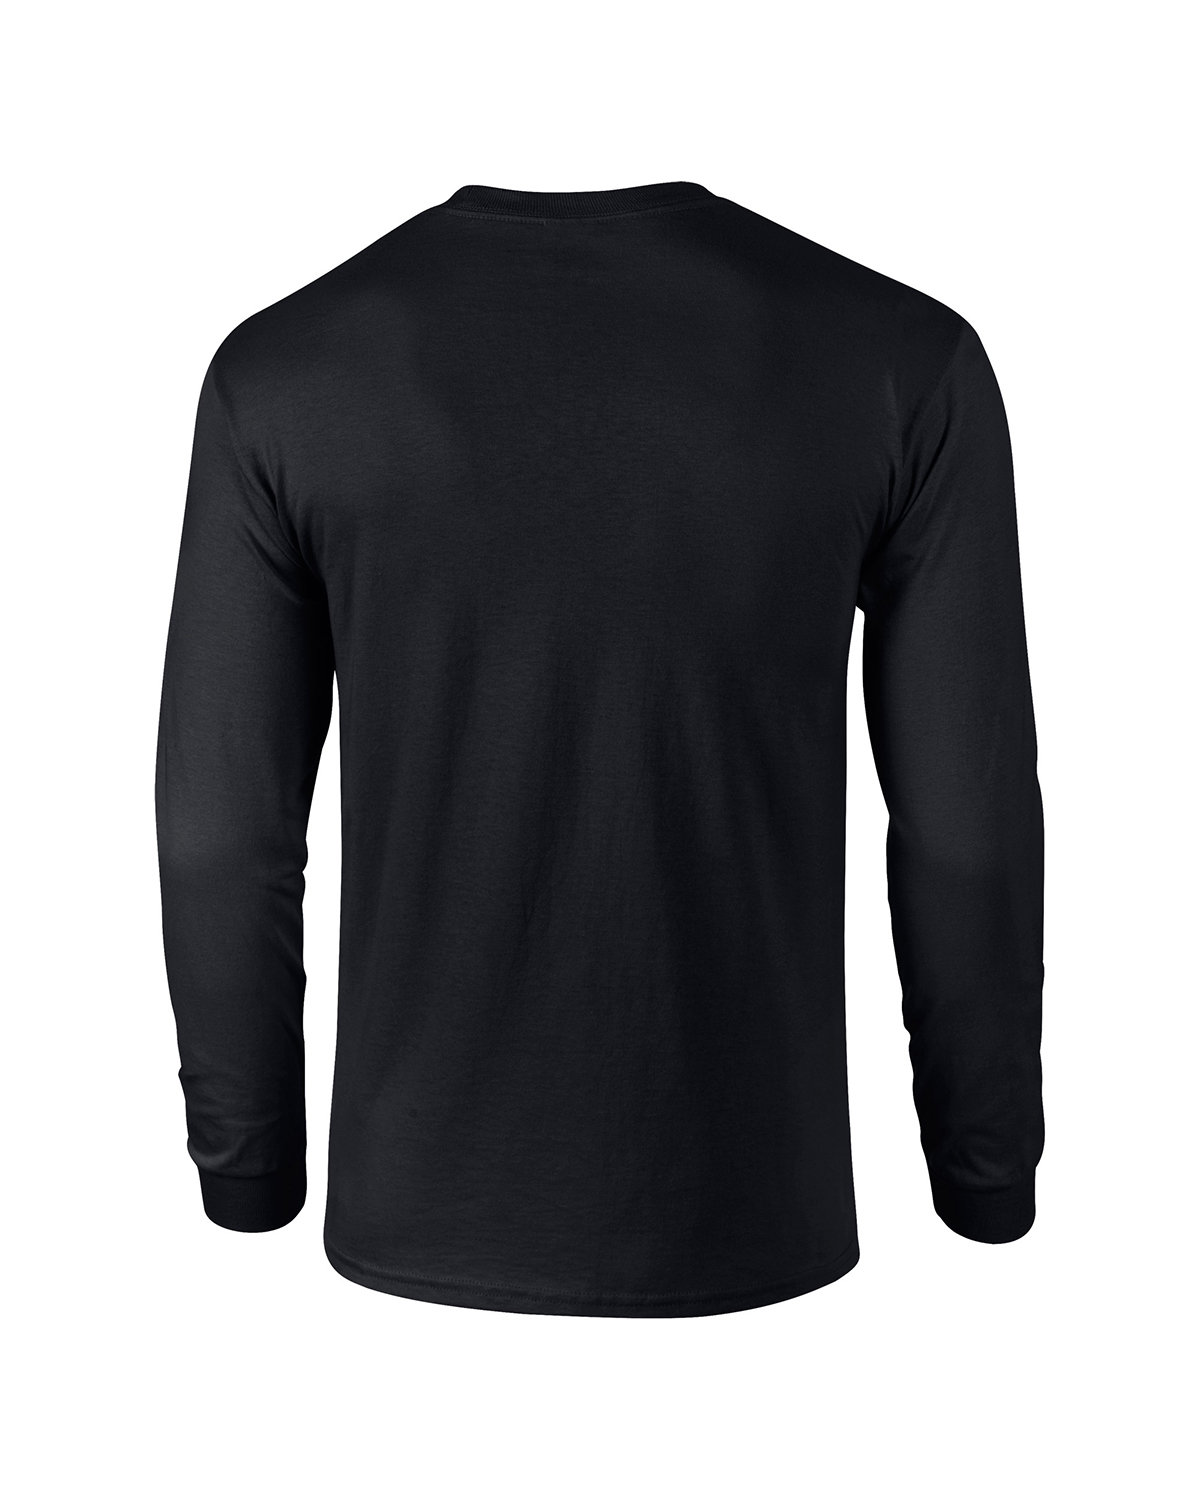 Gildan Adult 50/50 Long-Sleeve T-Shirt